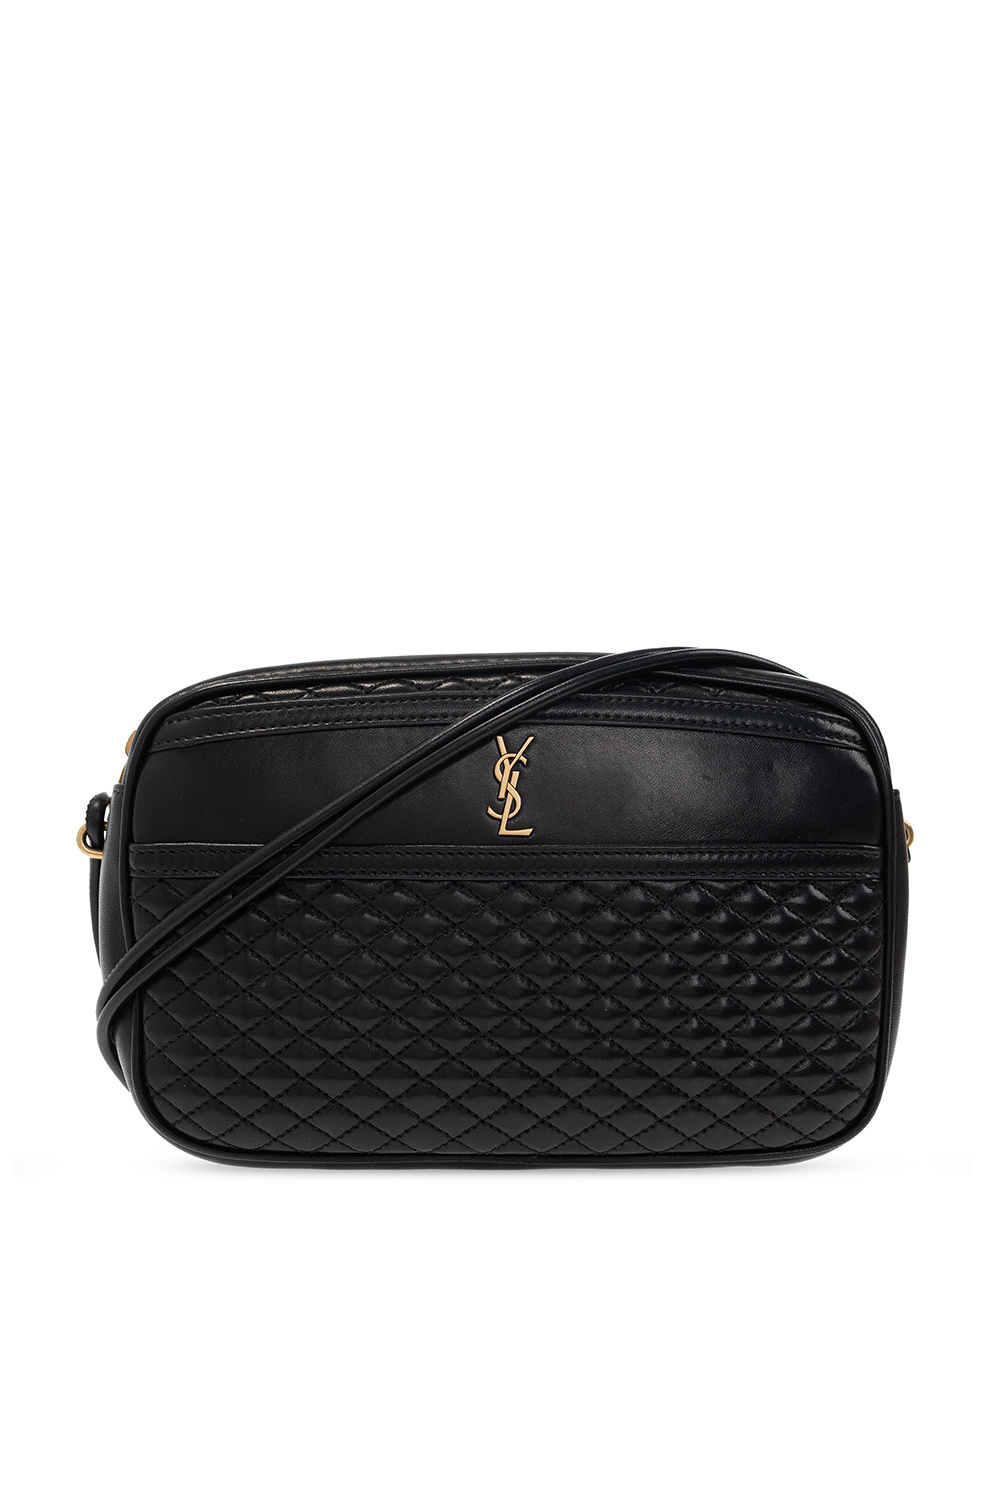 Victoire leather handbag Saint Laurent Black in Leather - 26050067